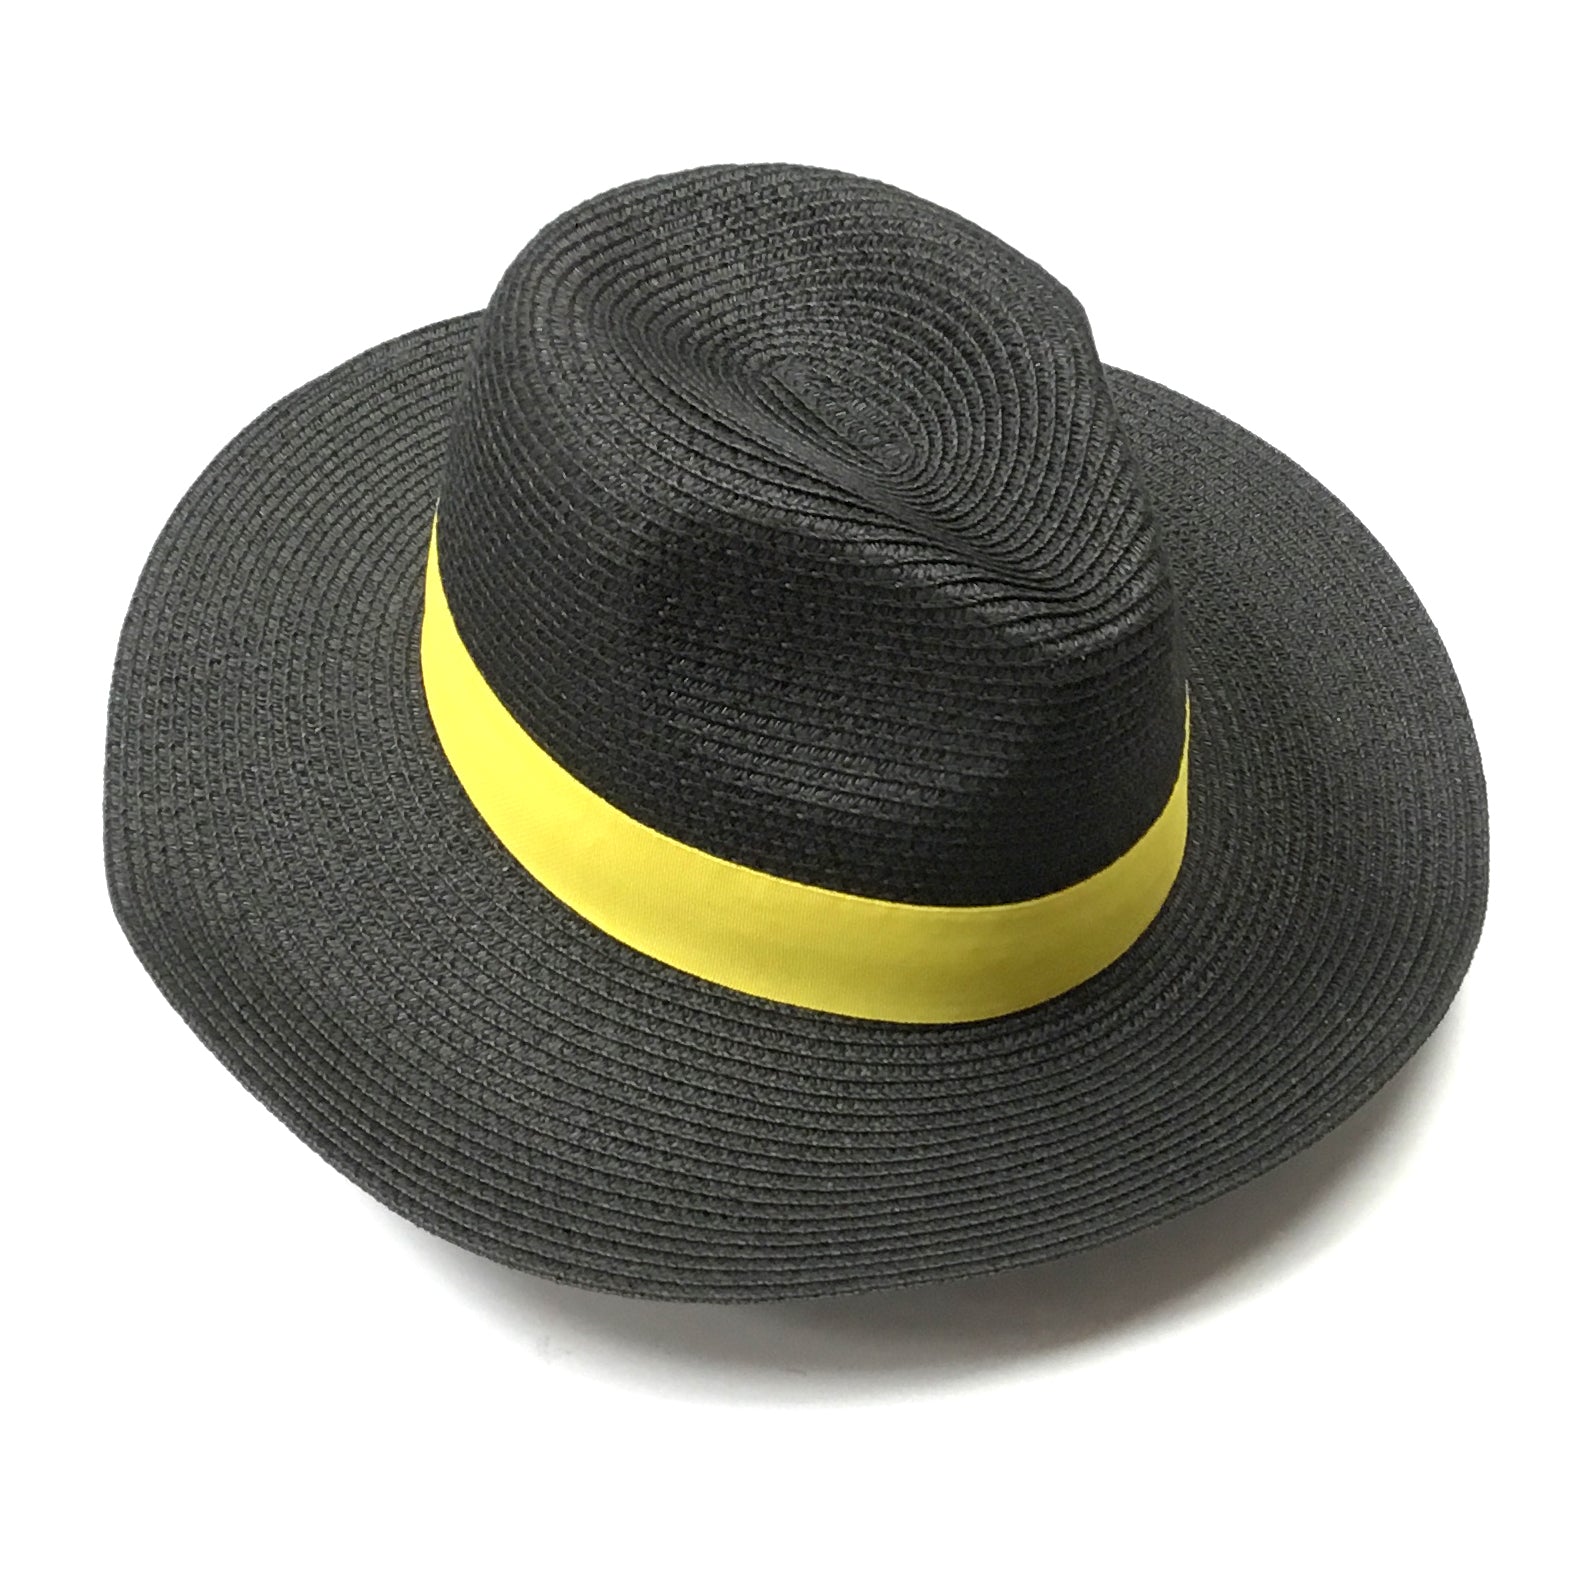 Folding Travel Panama Sun Hat - Black & Yellow